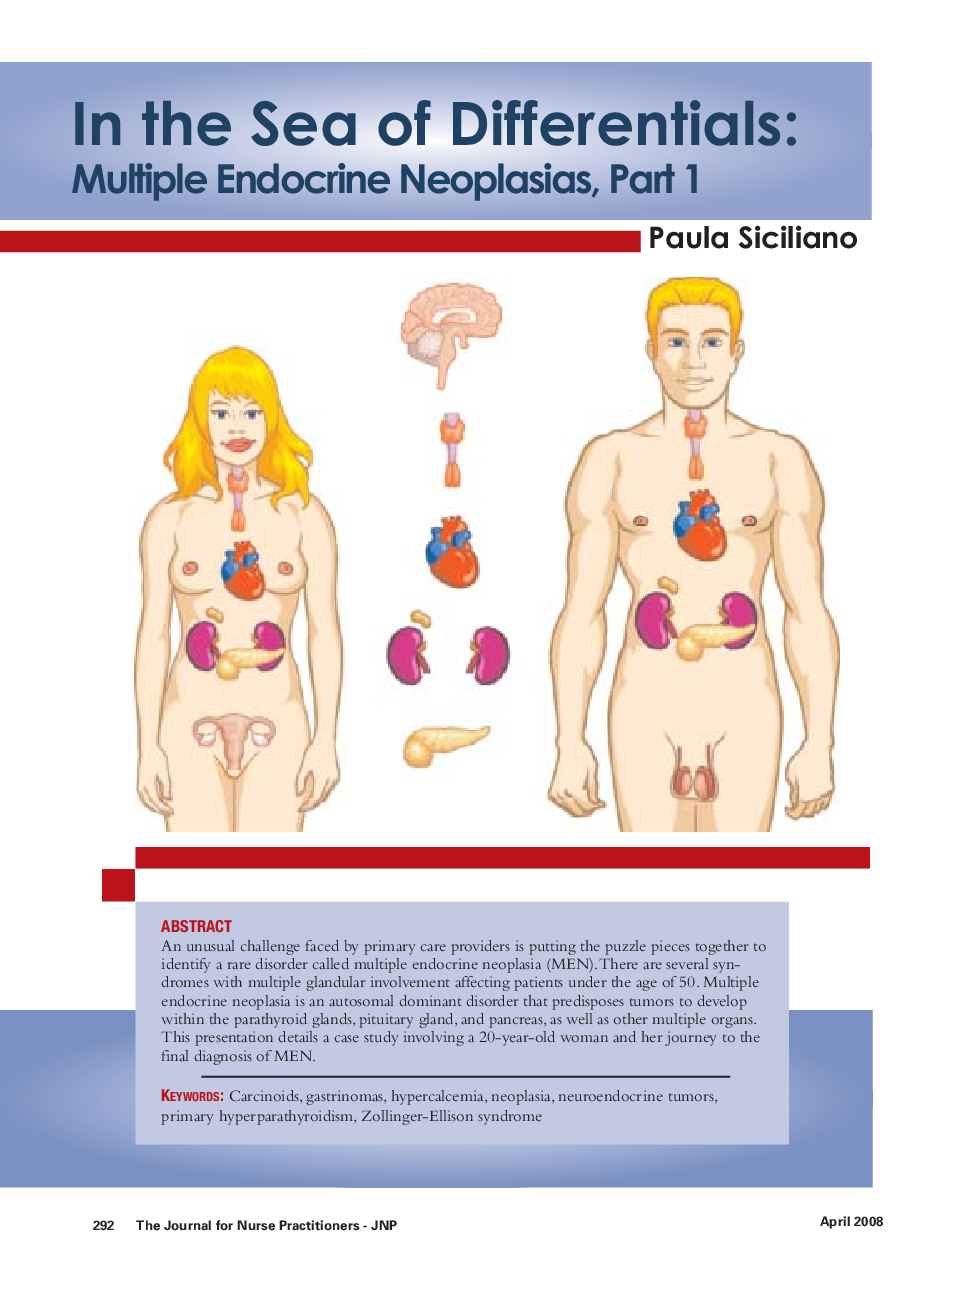 In the Sea of Differentials: Multiple Endocrine Neoplasias, Part 1